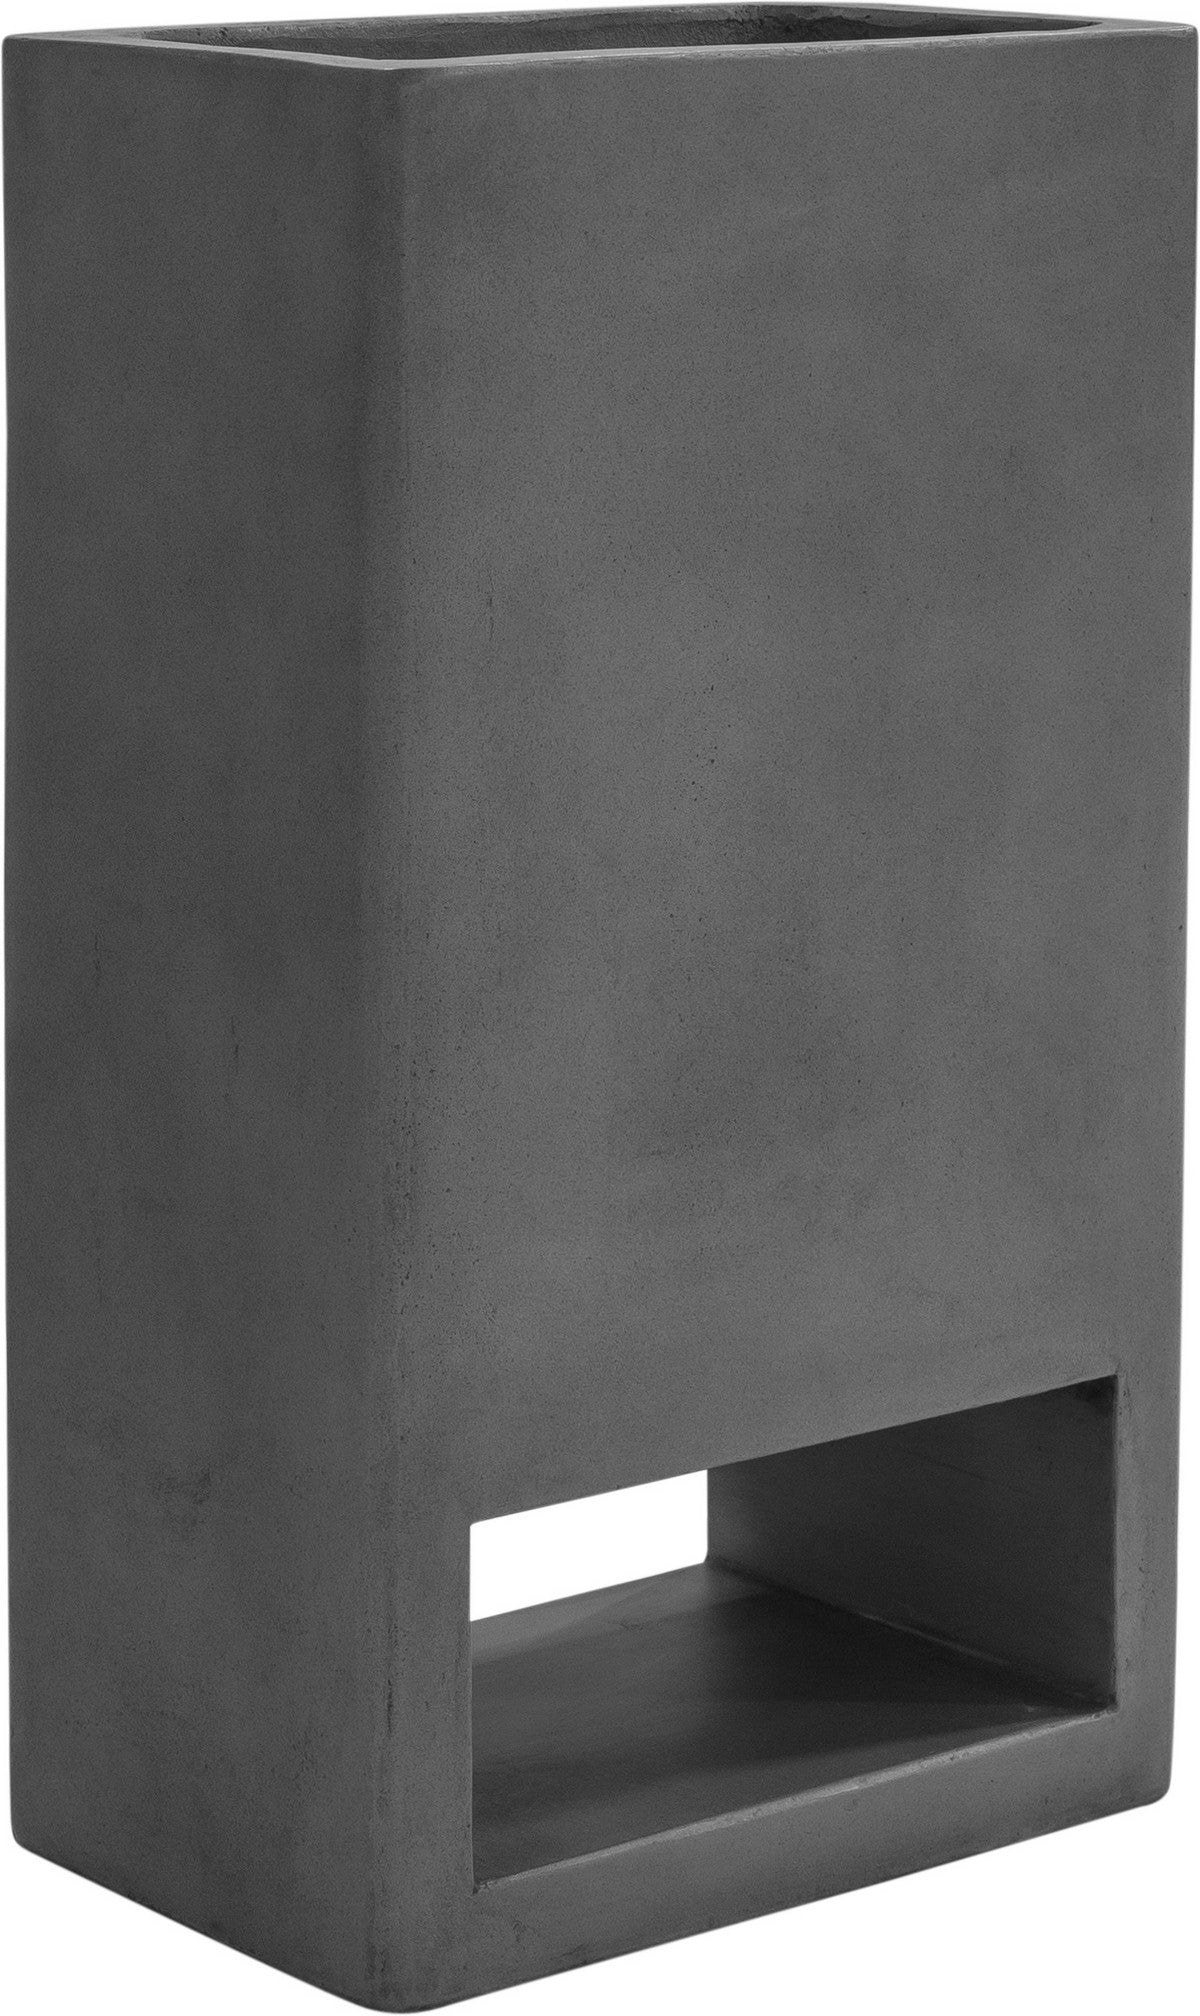 Moe's Home Collection Bristol Planter Concrete Grey - BQ-1049-25